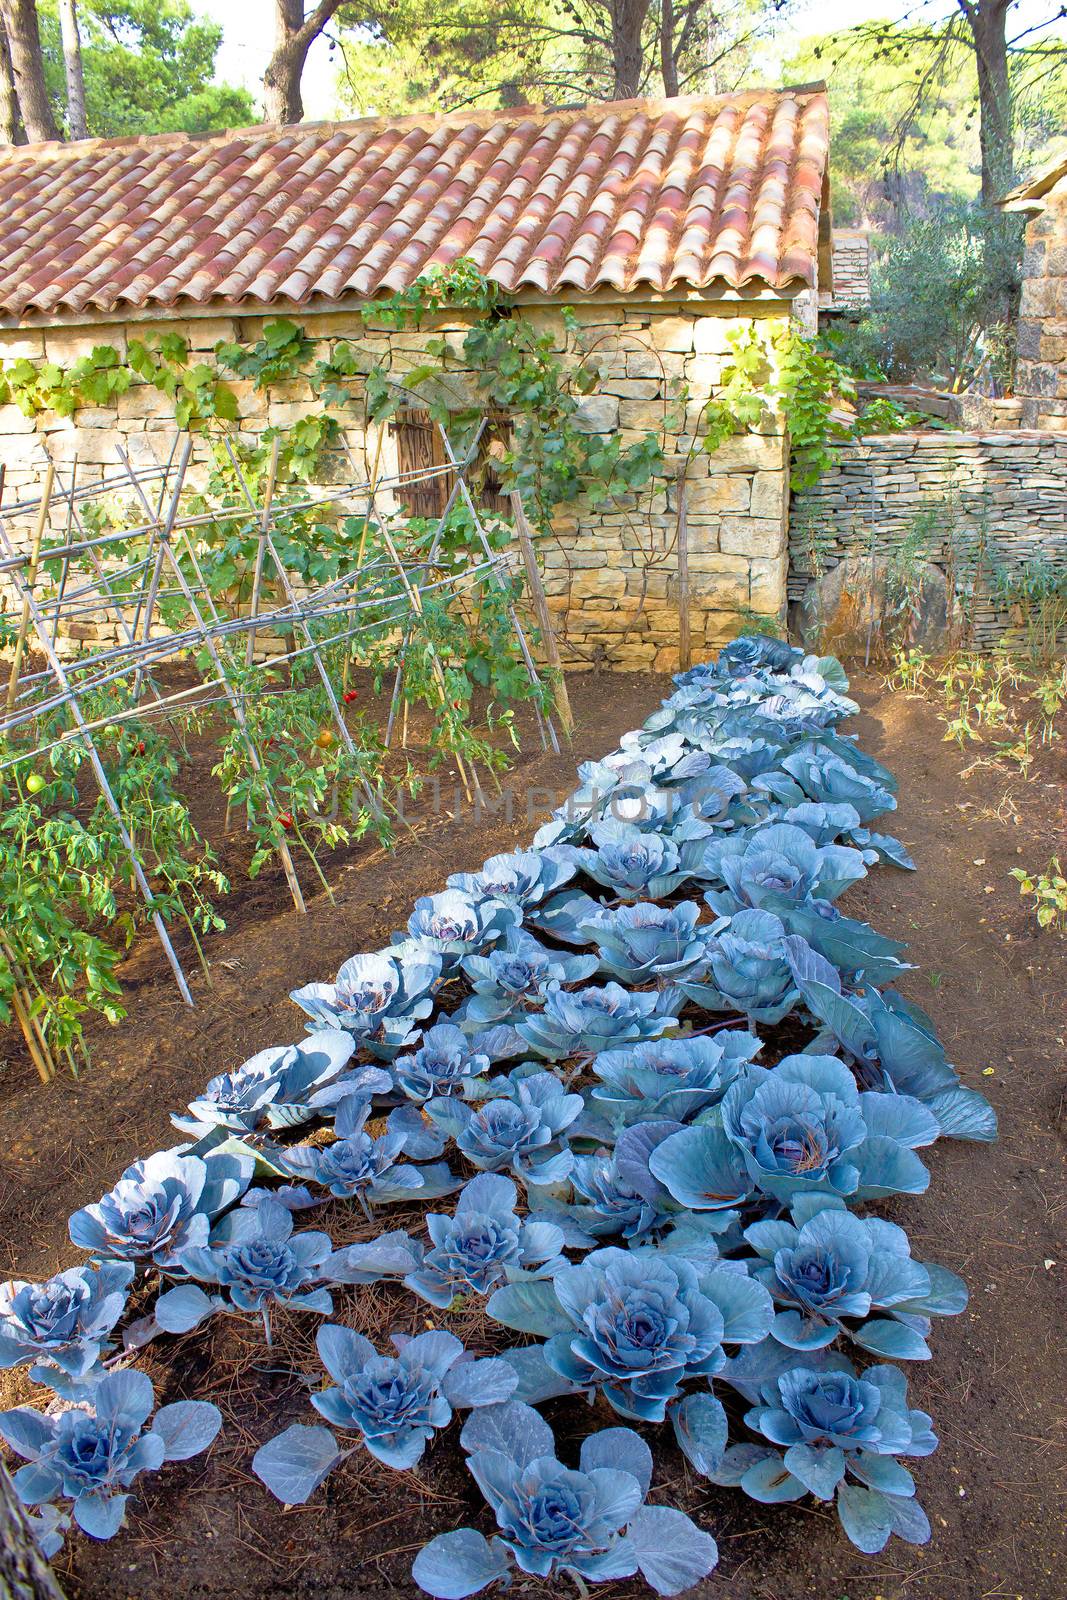 Cabbage vegetable in backyard garden by xbrchx